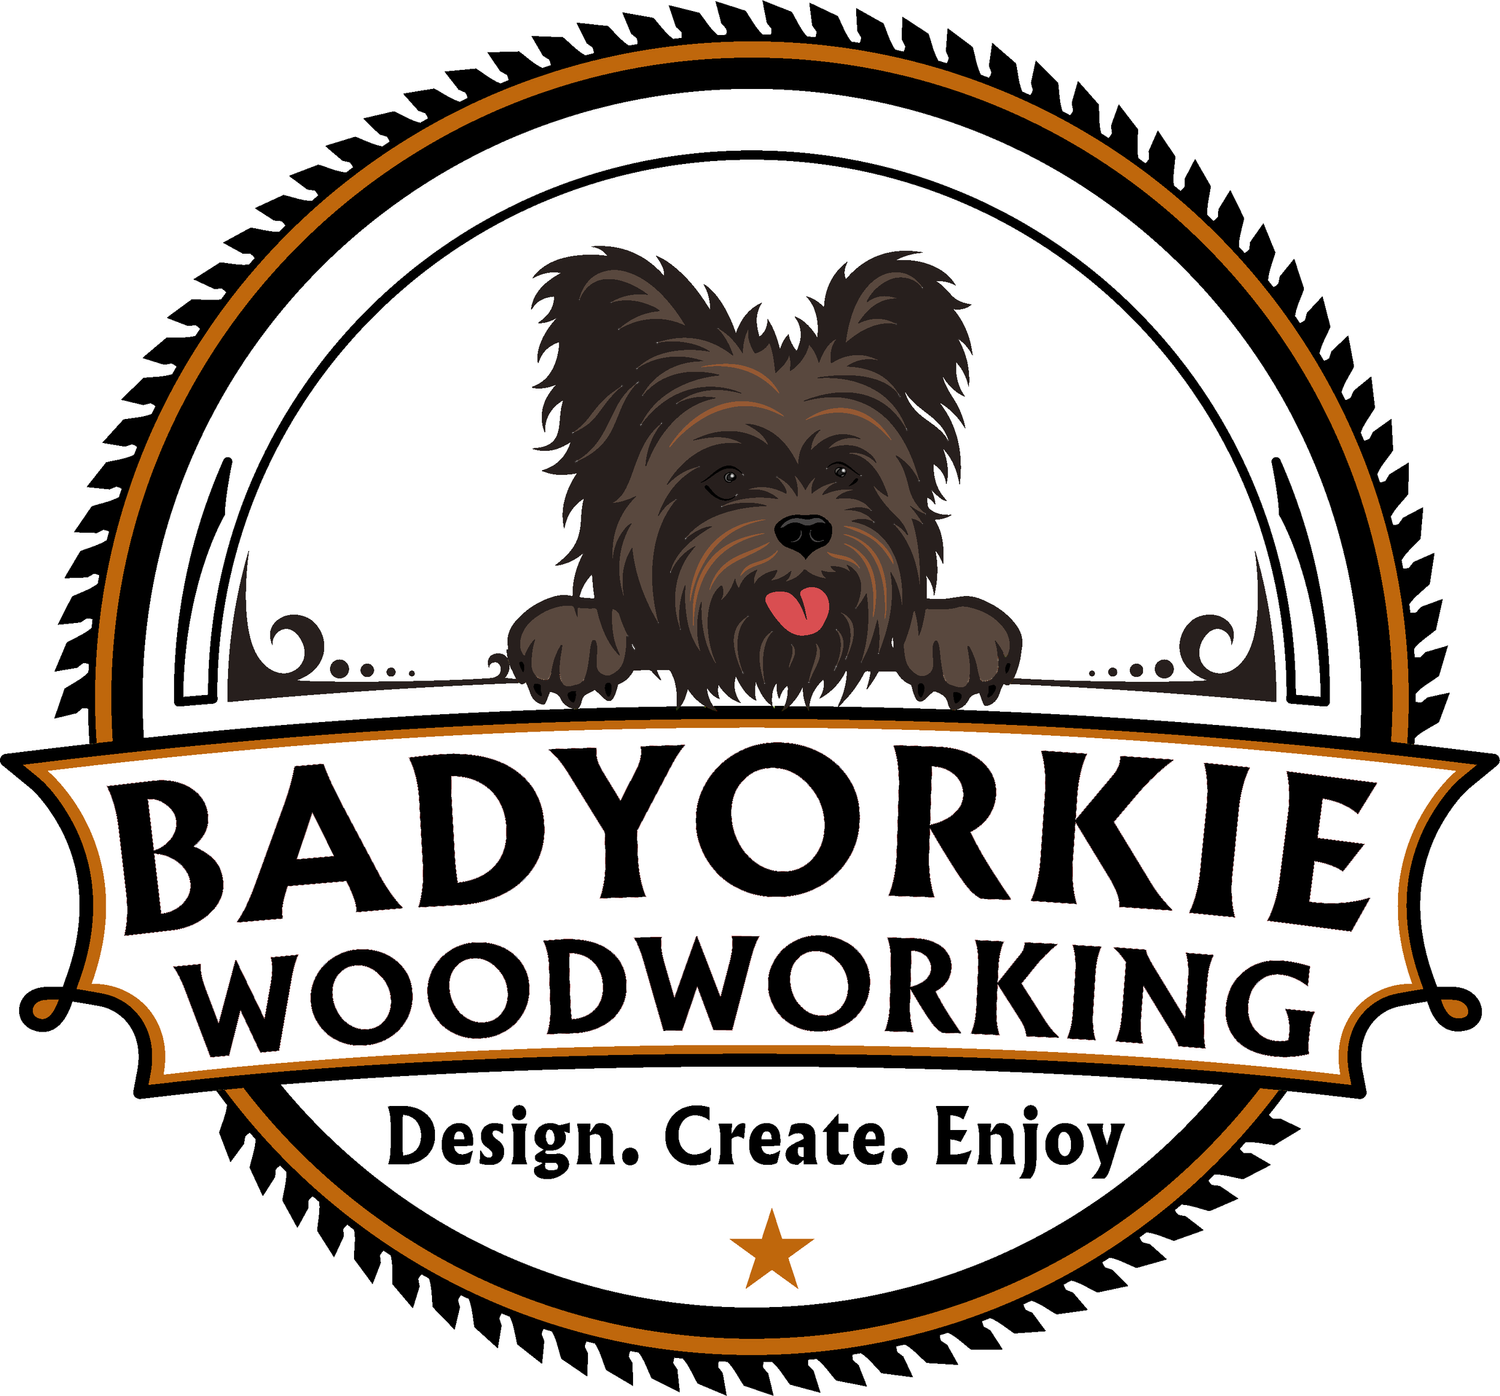 BadYorkie Woodworking